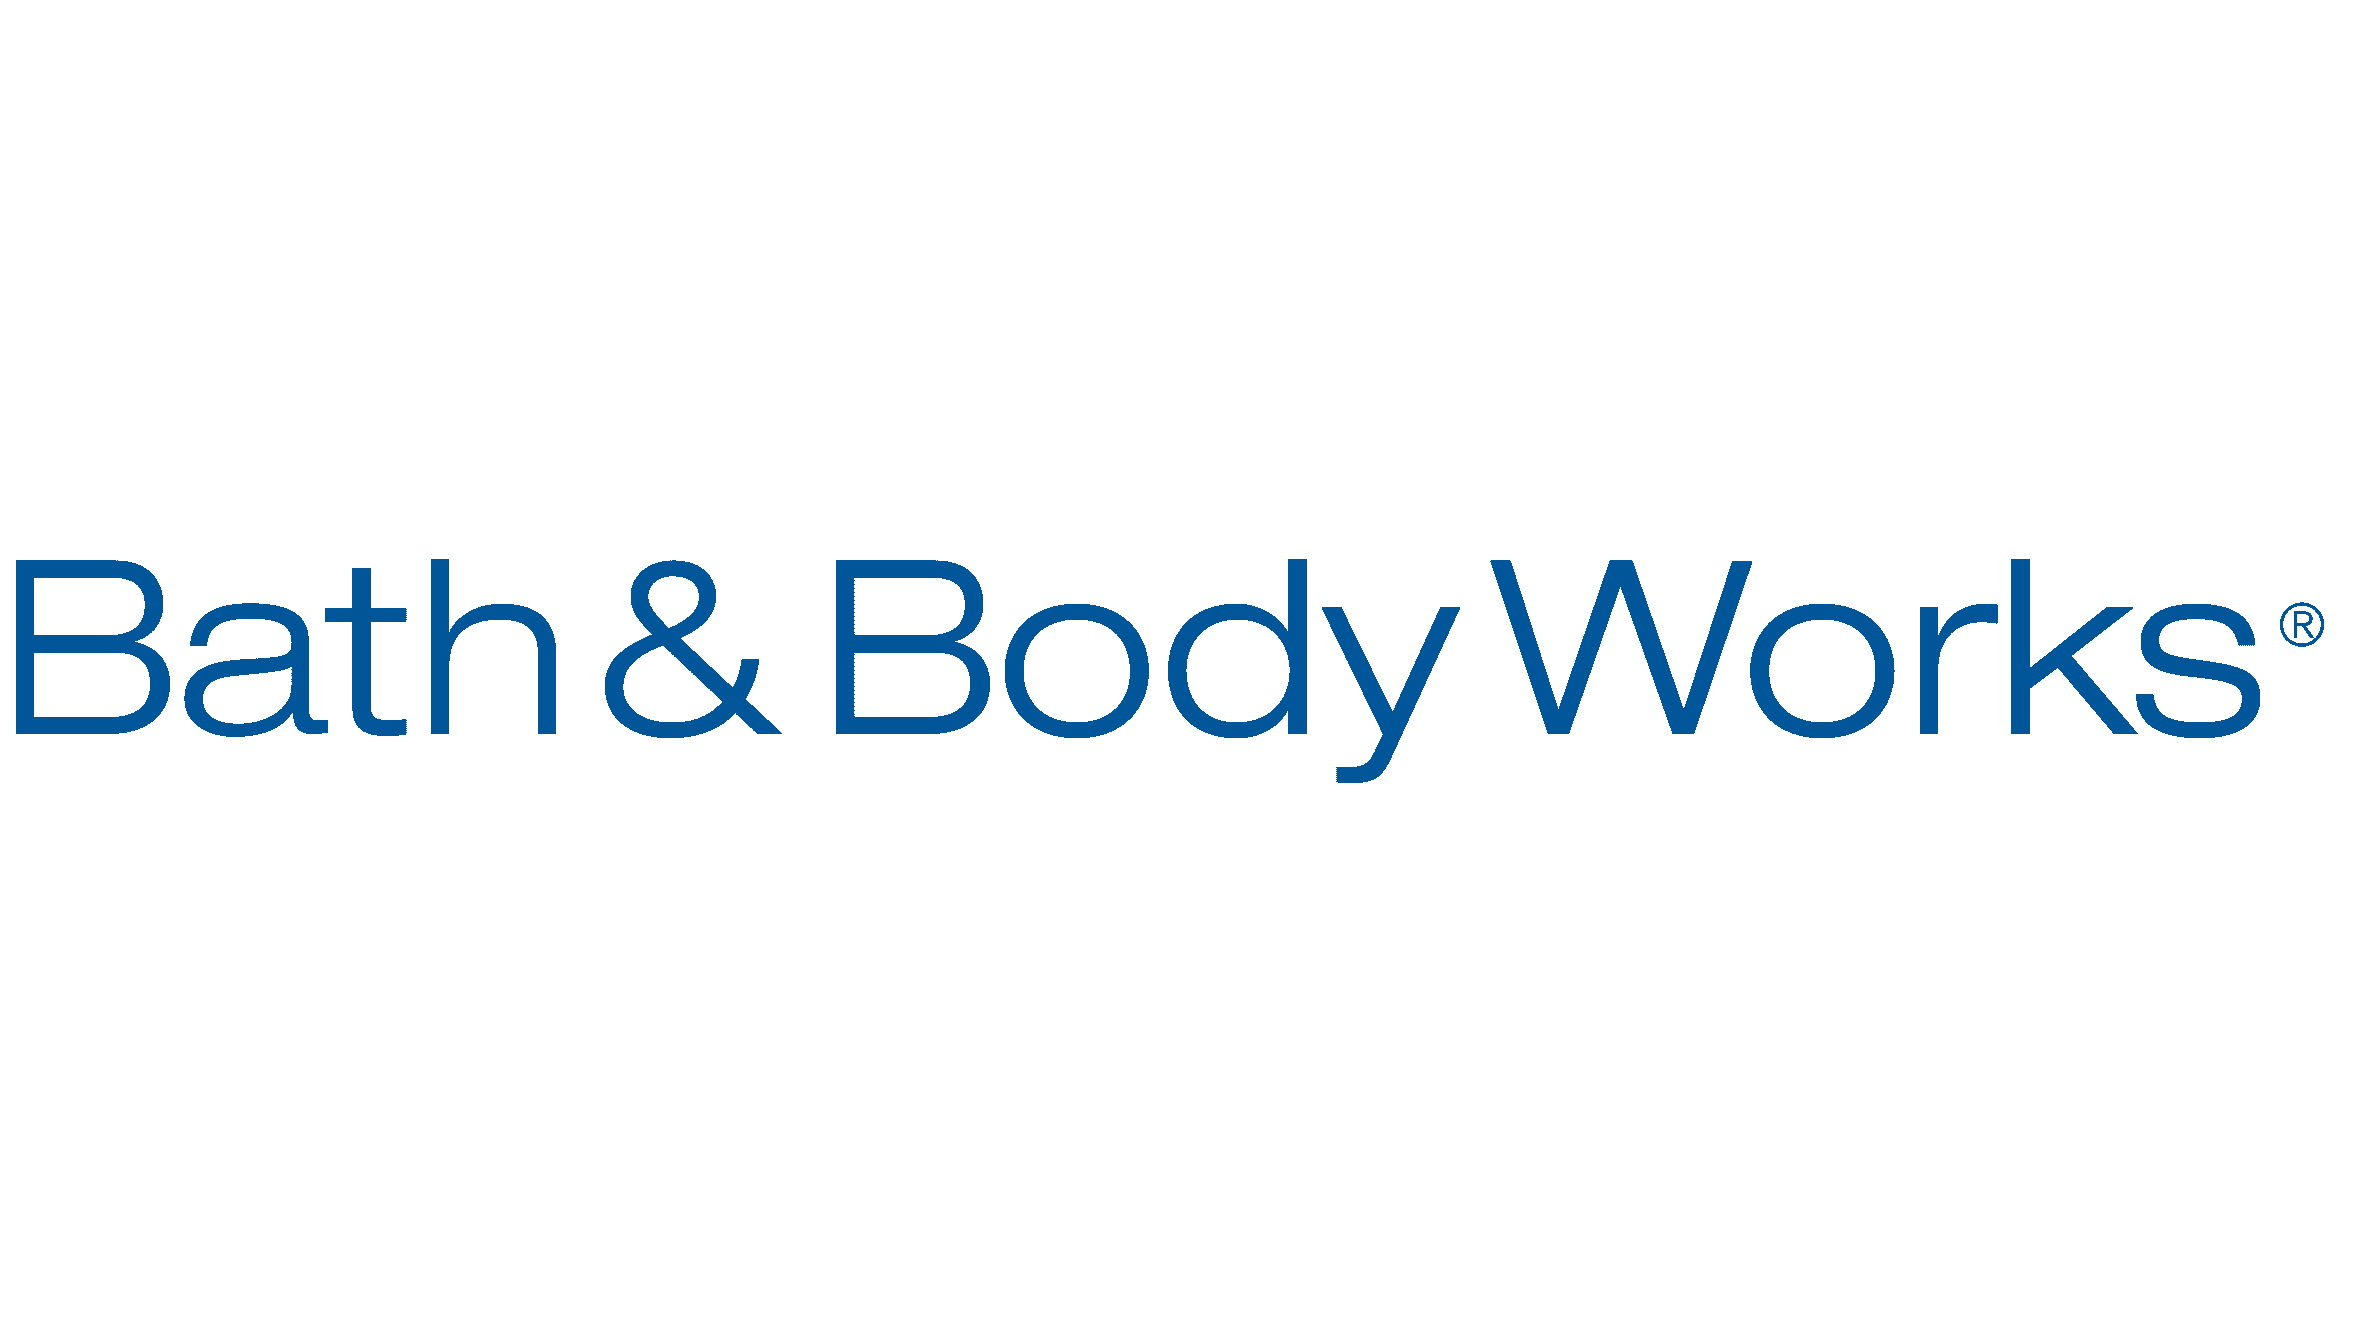 Bath & Body Works – Coming Soon